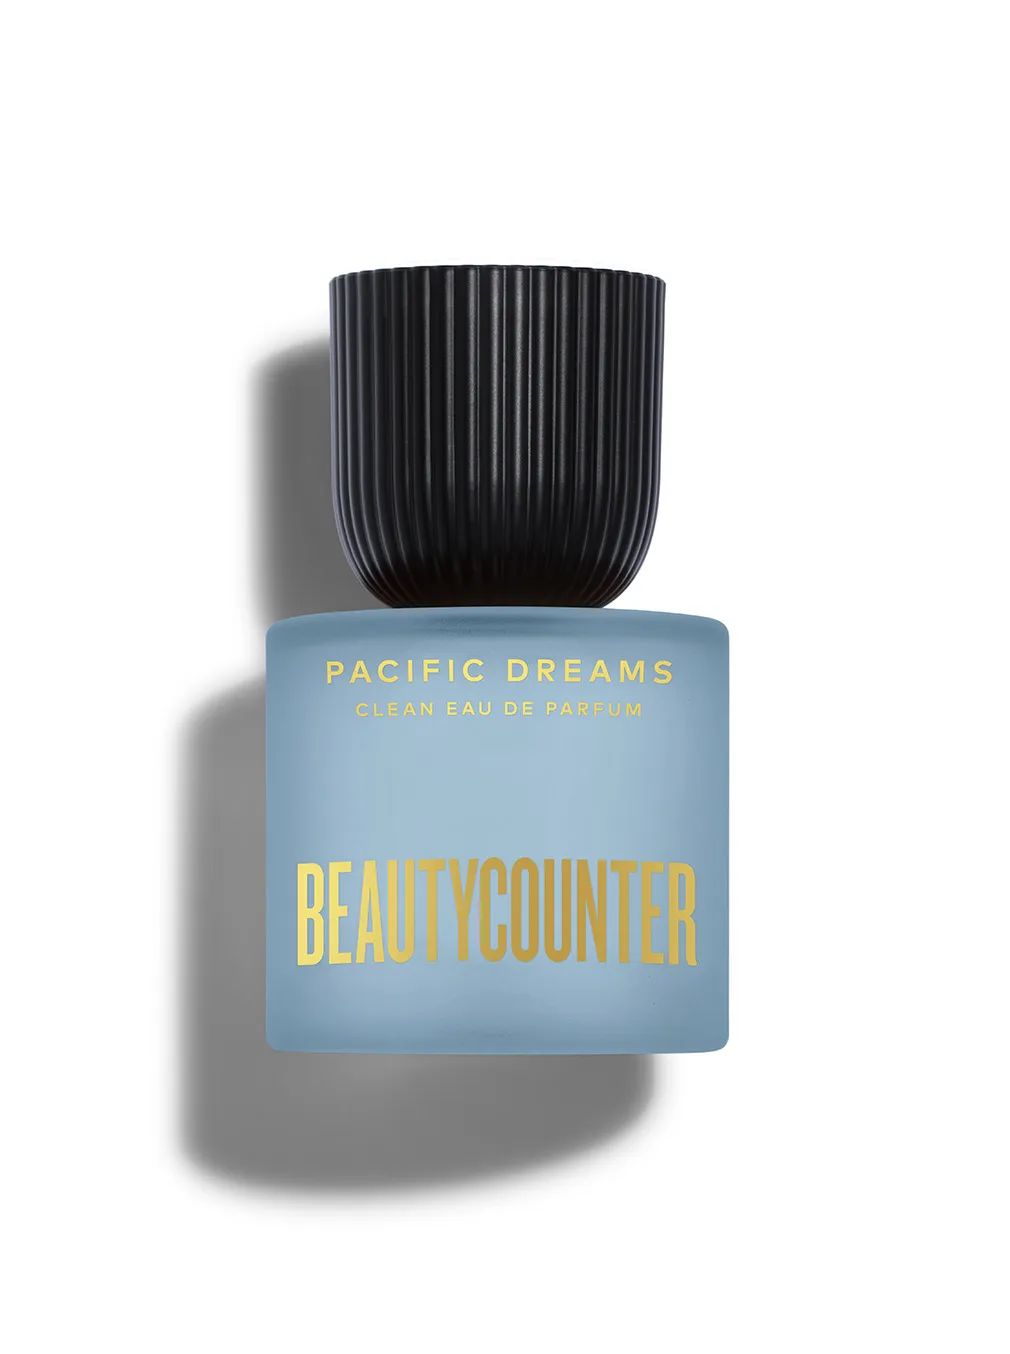 Pacific Dreams Clean Eau De Parfum - Beautycounter - Skin Care, Makeup, Bath and Body and more! | Beautycounter.com